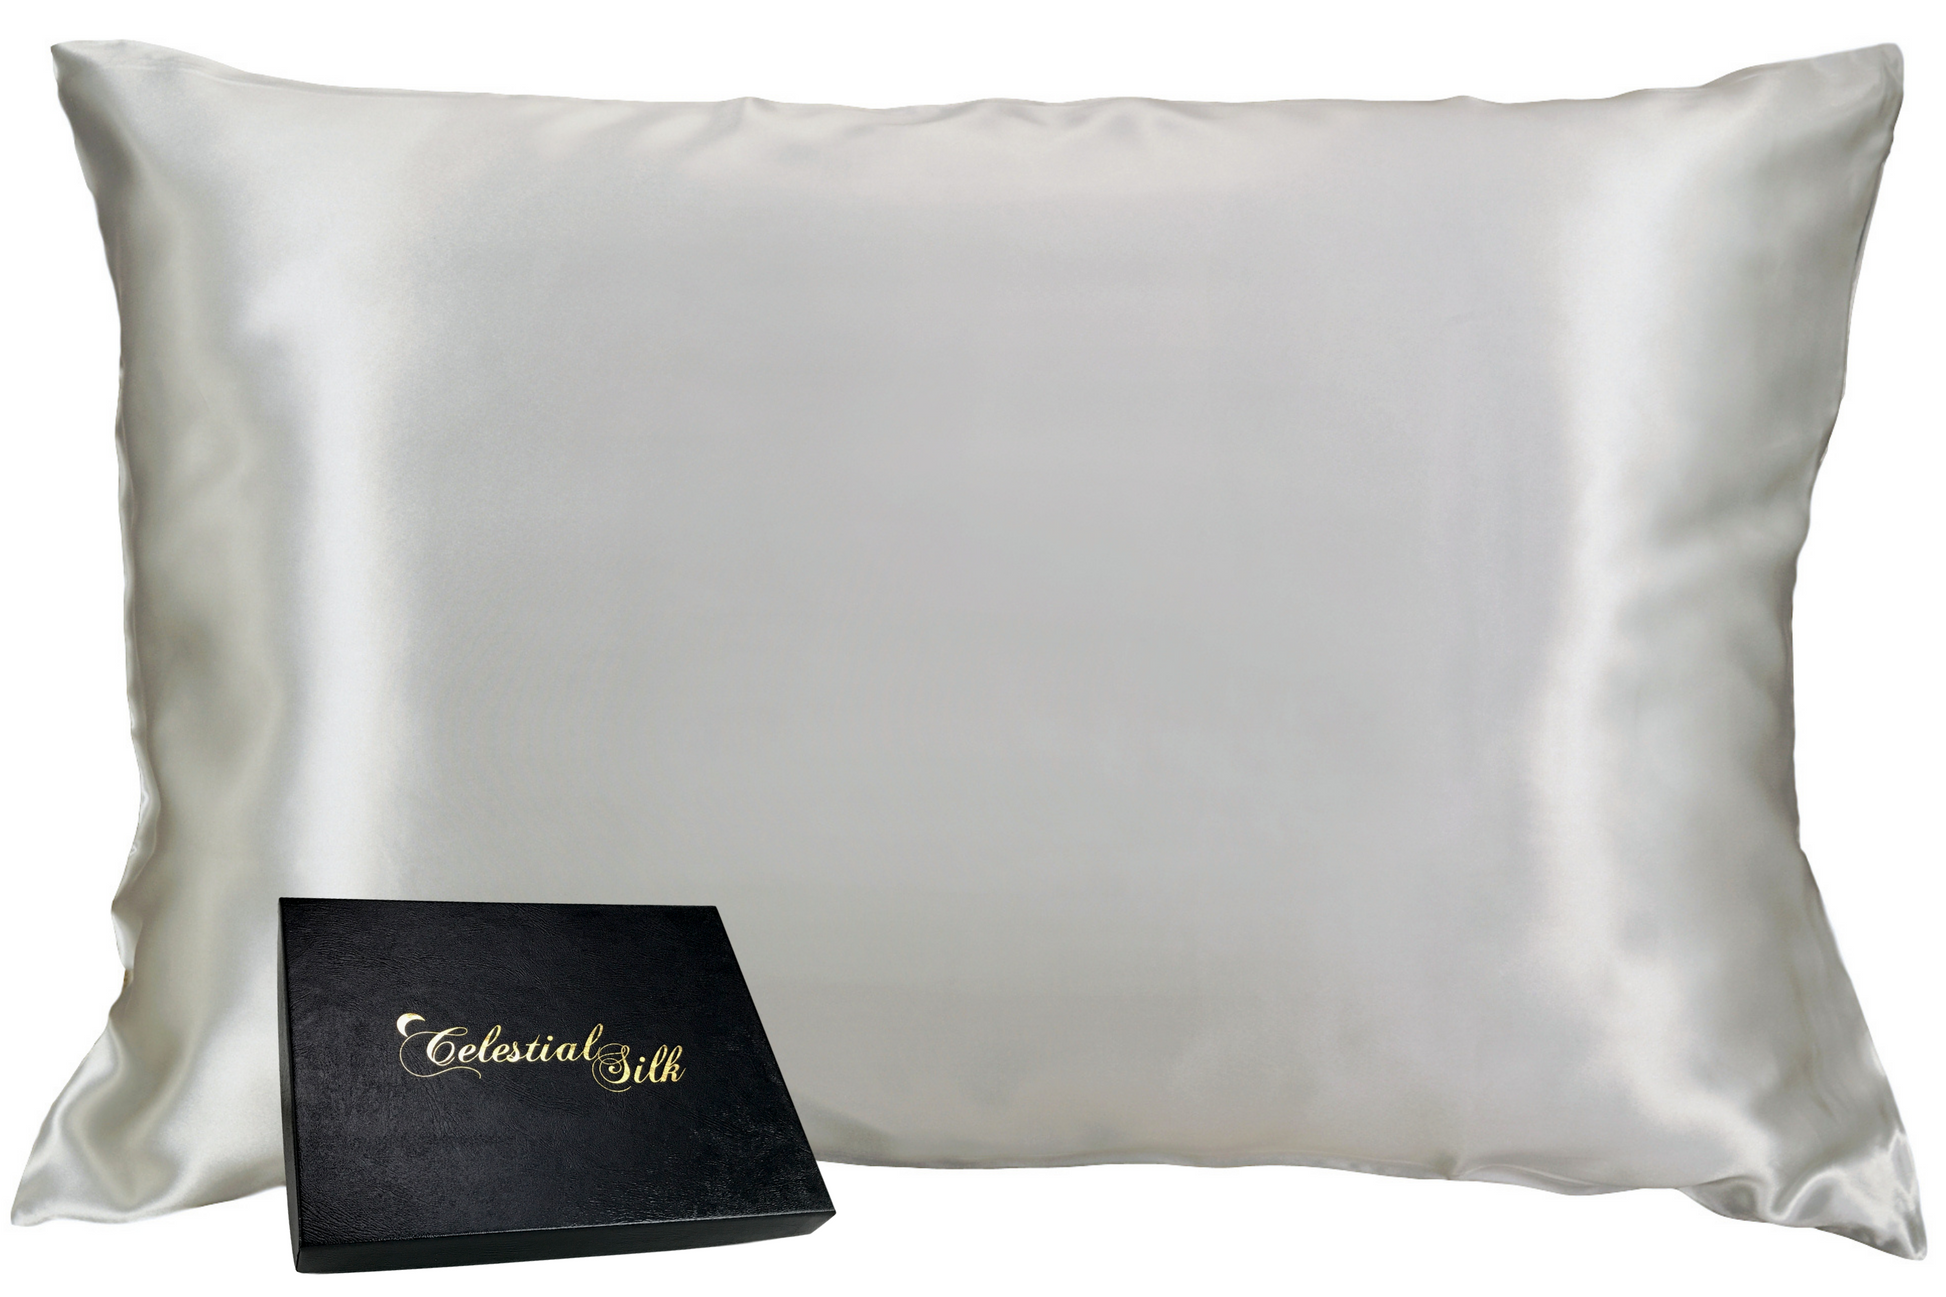 Celestial Silk silver mulberry silk pillowcase